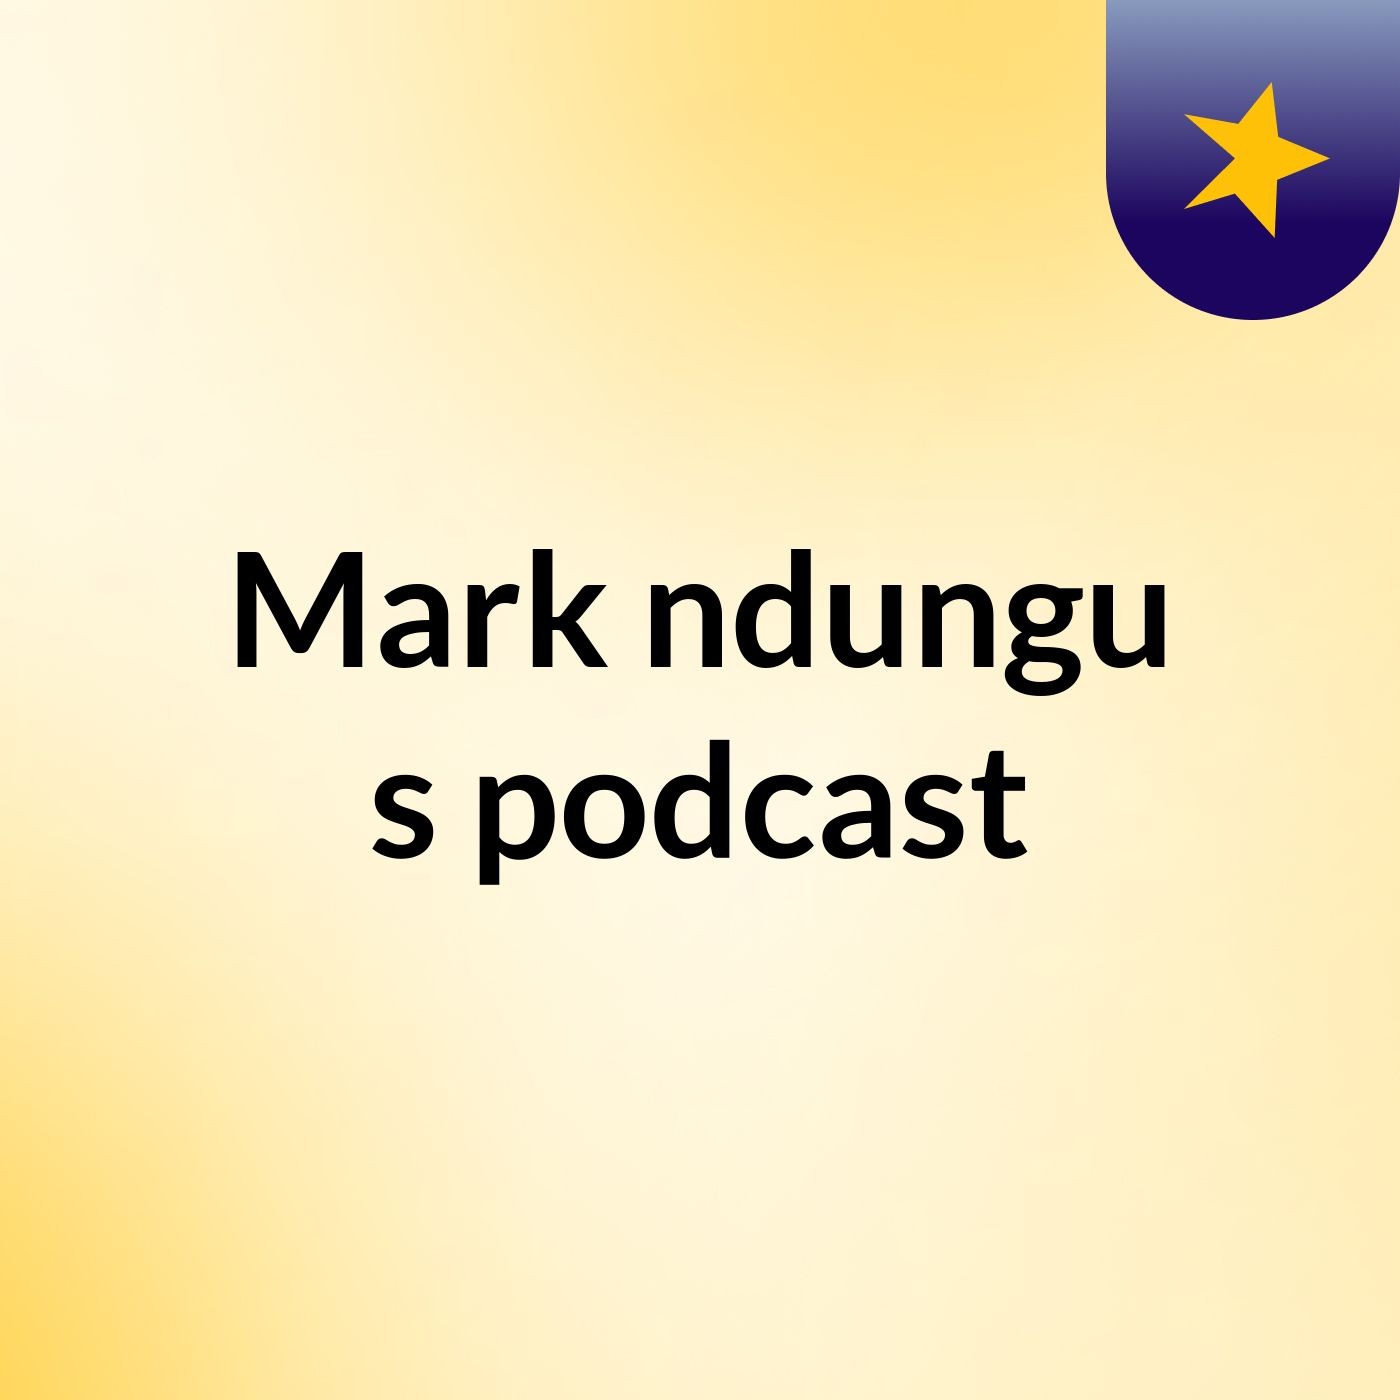 Episode 8 - Mark ndungu's podcast